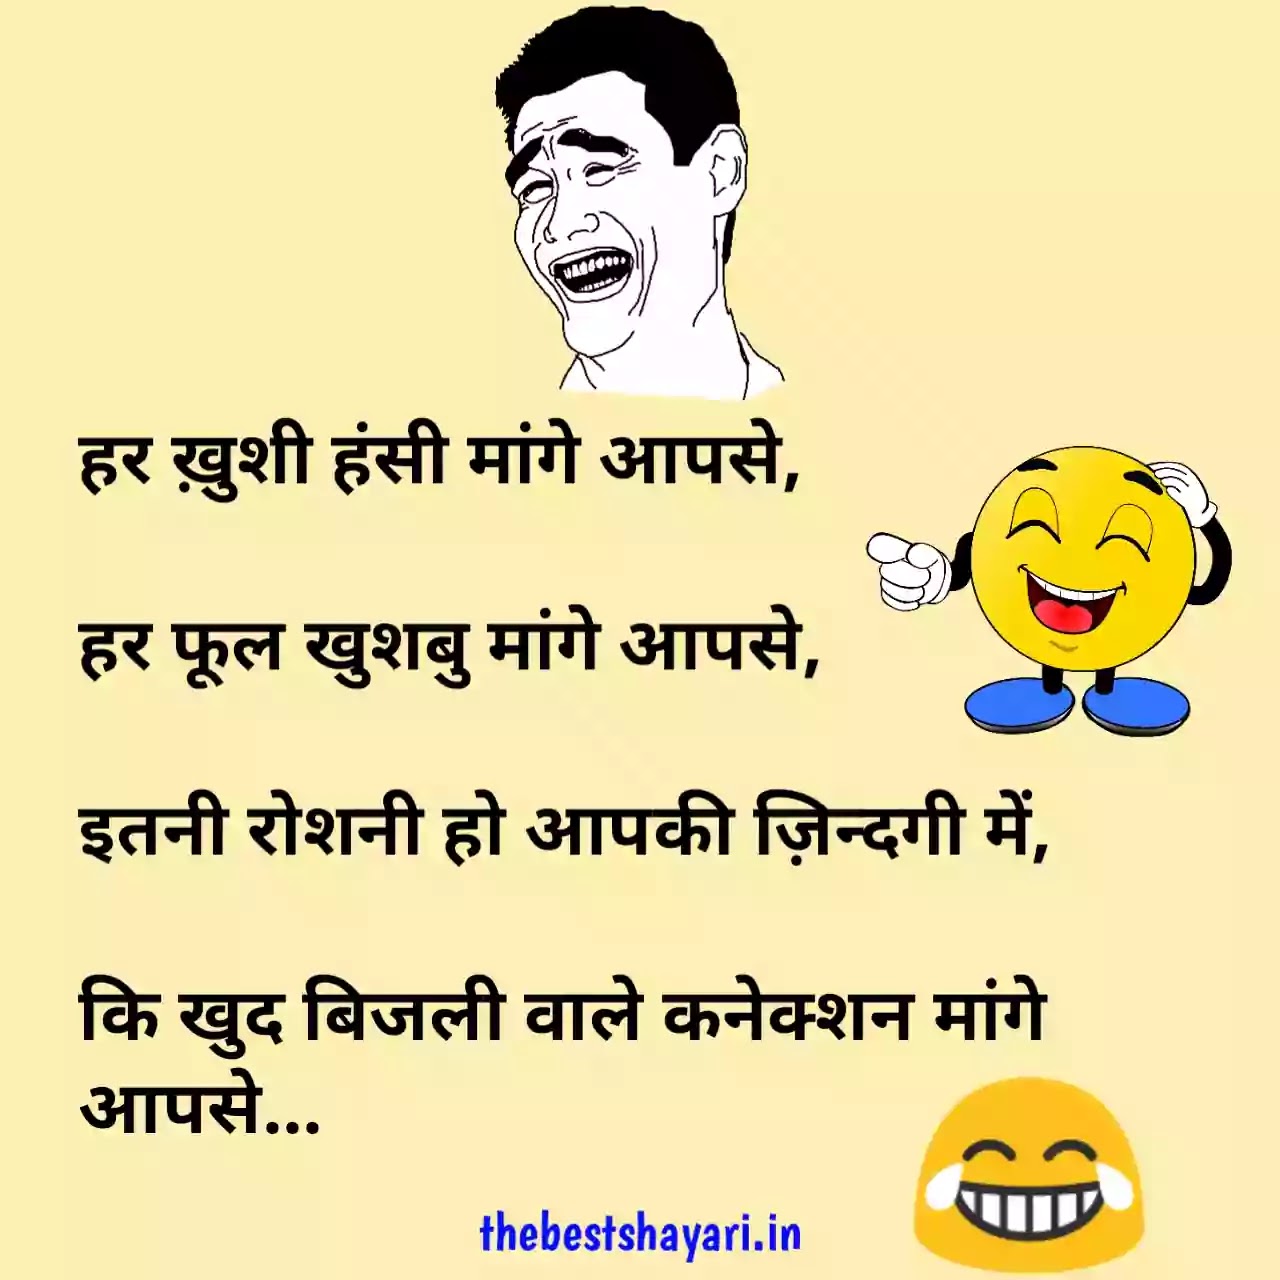 Funny shayari for friends in Hindi